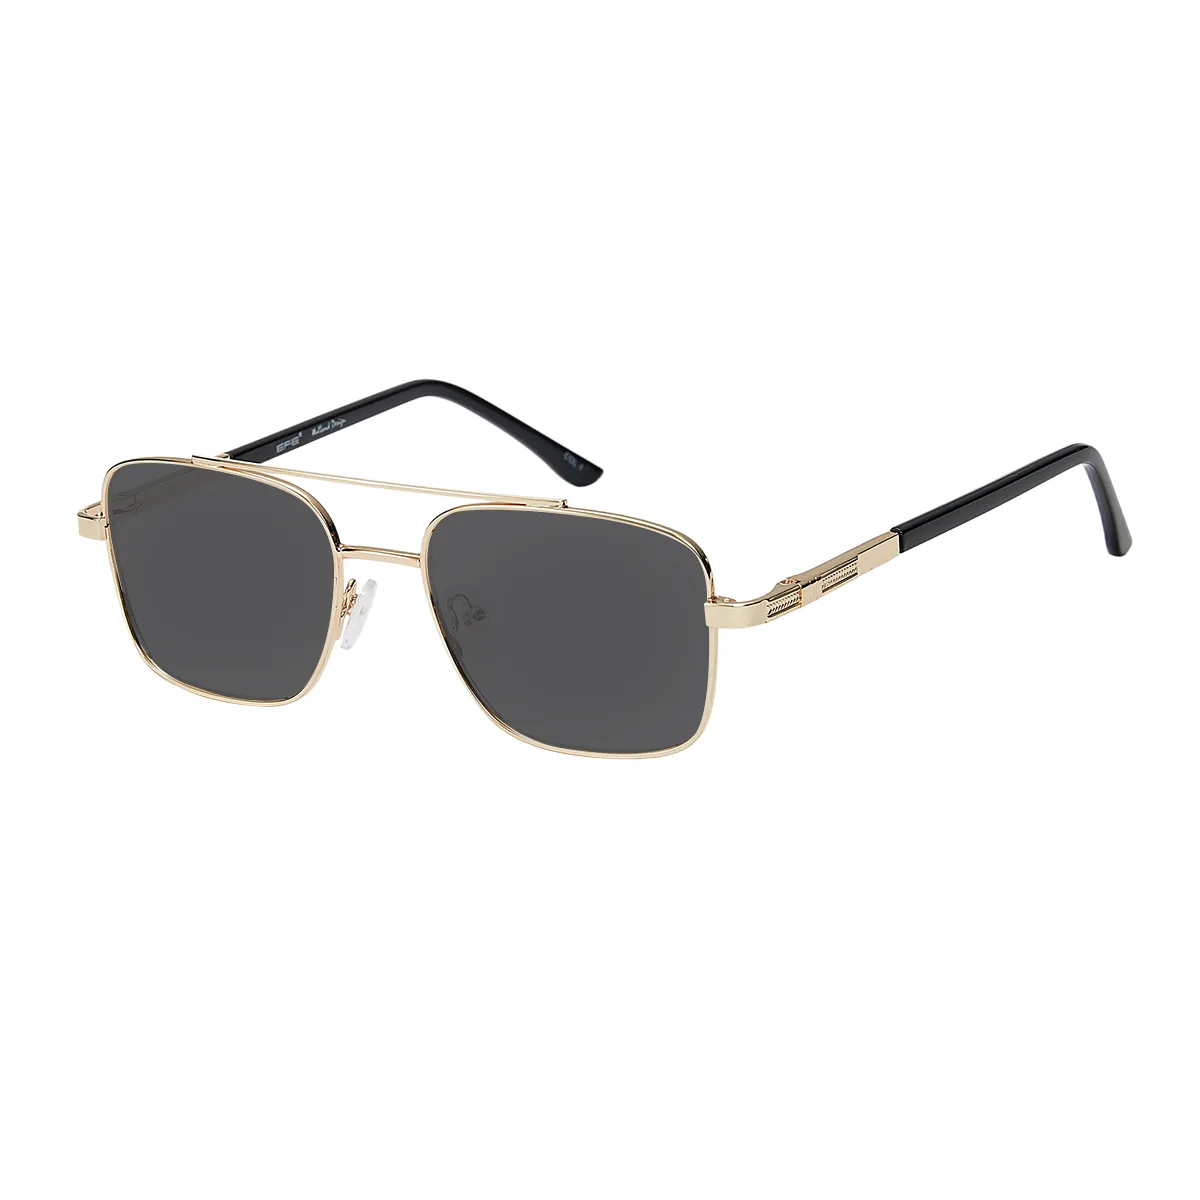 Elisha - Square Gold Sunglasses for Men